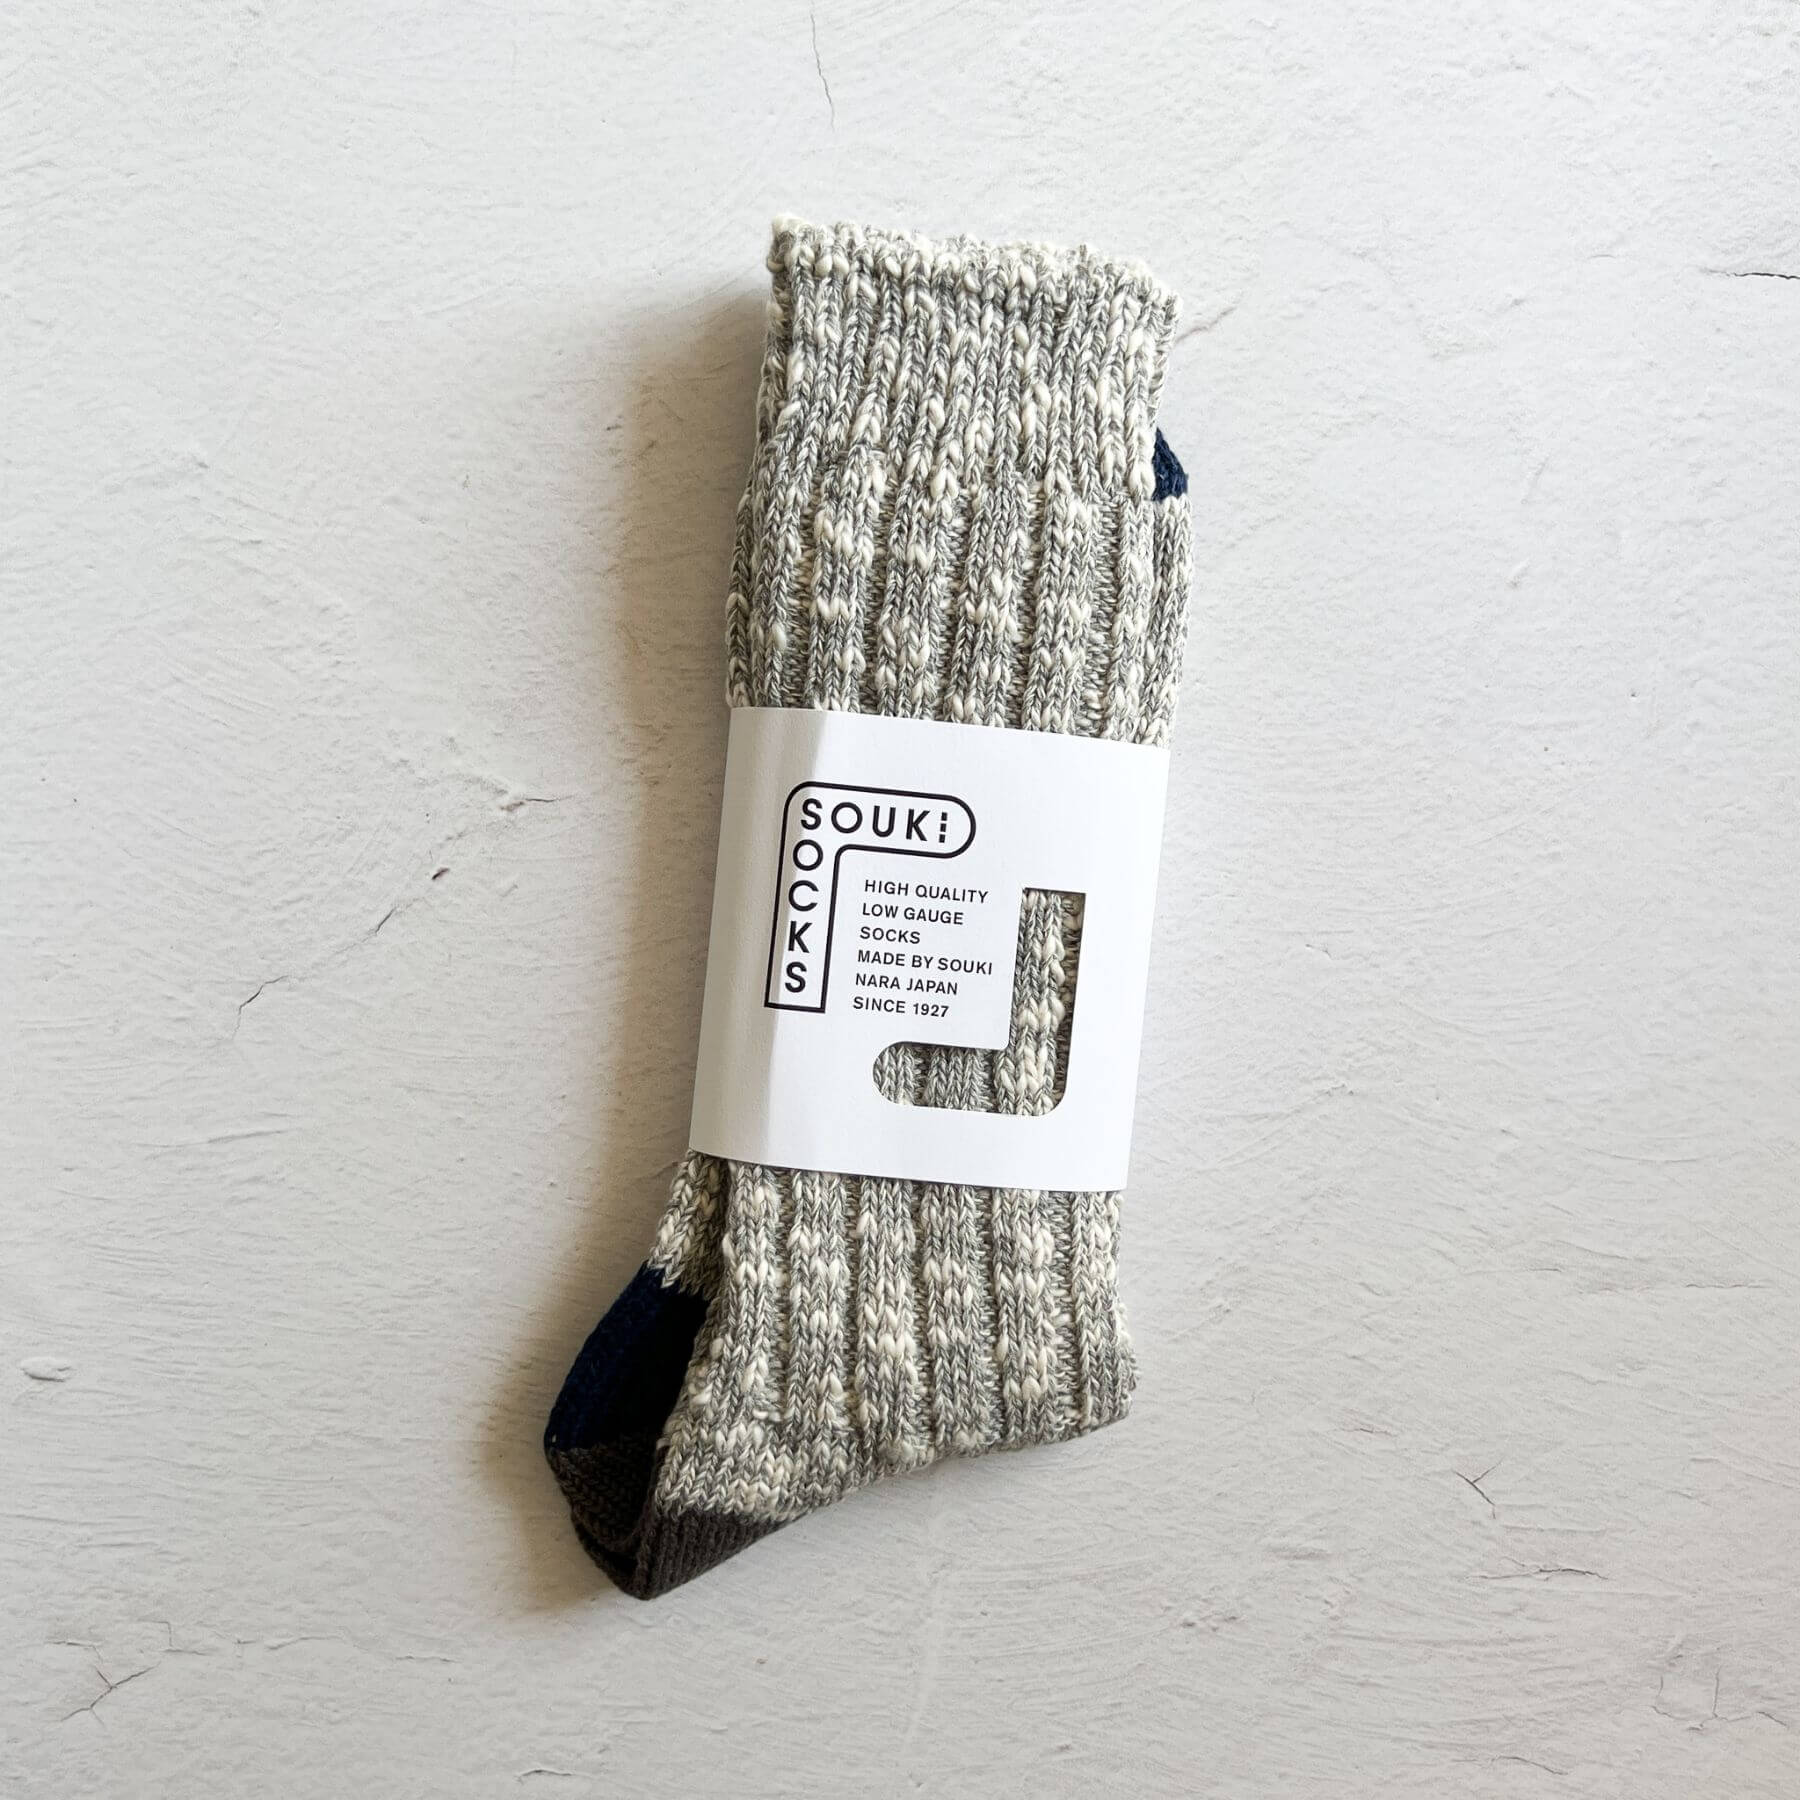 Quality Low Gauge Socks made in Nara JapanNagamochi Shop